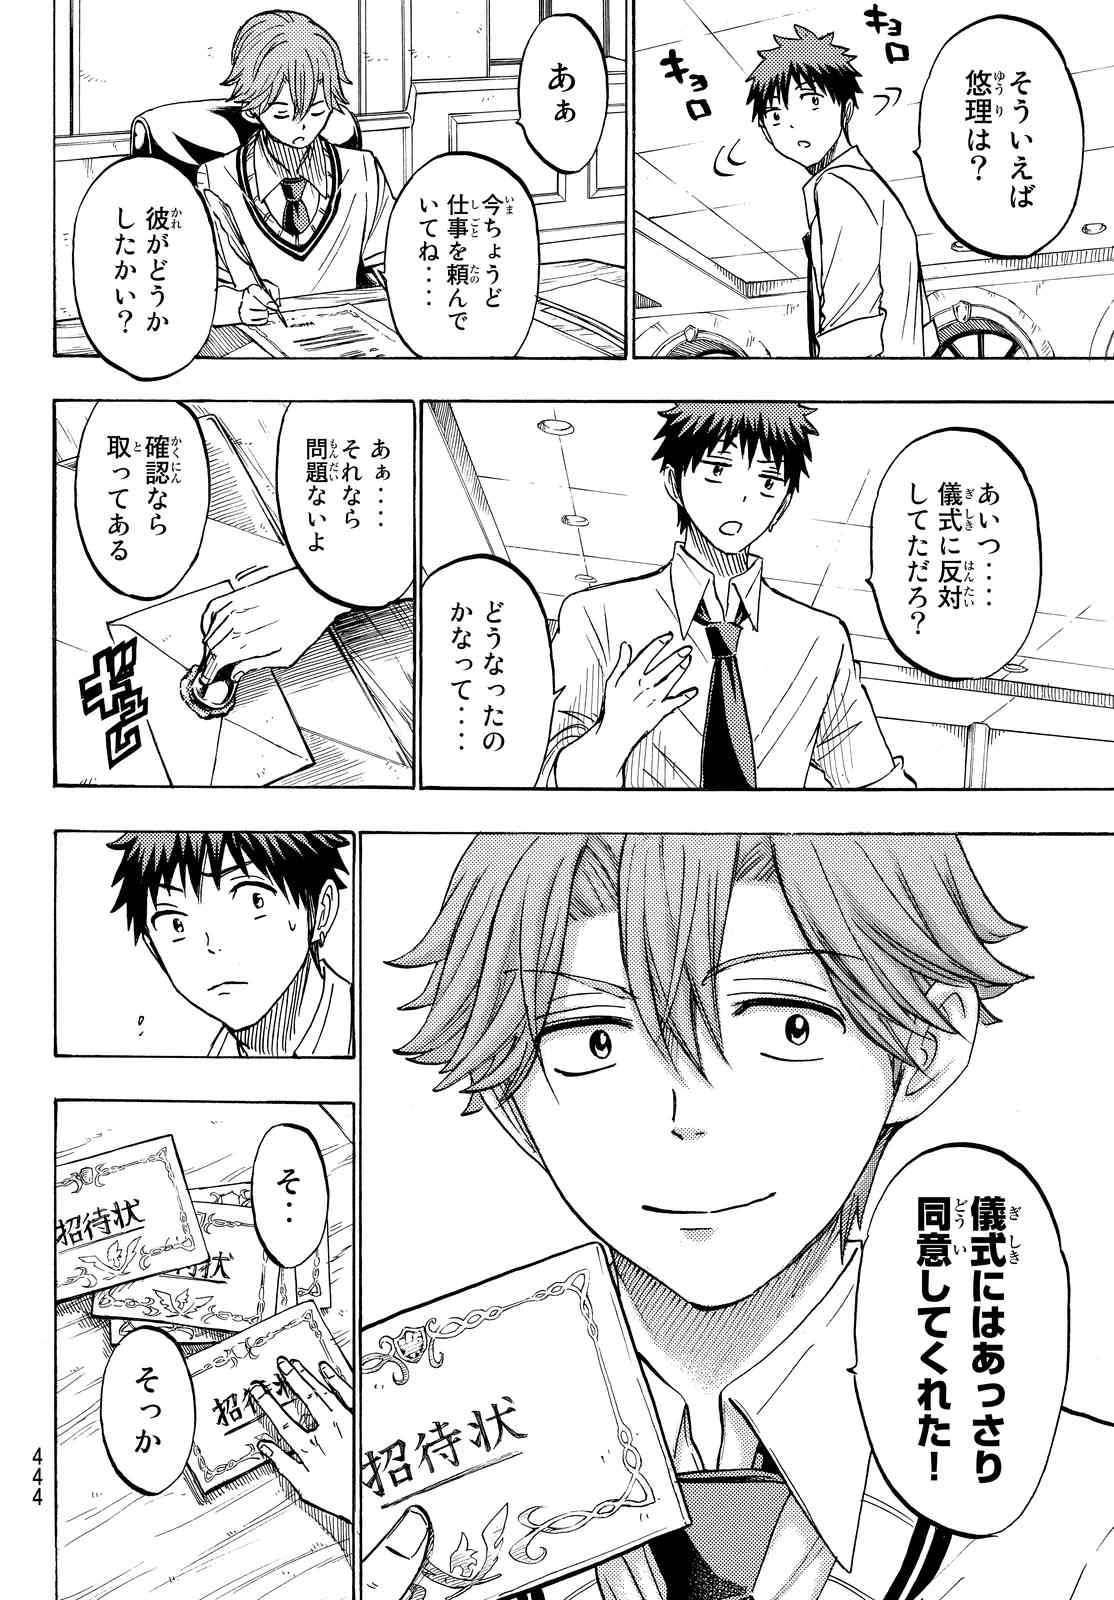 Yamada-kun to 7-nin no Majo - Chapter 223 - Page 4